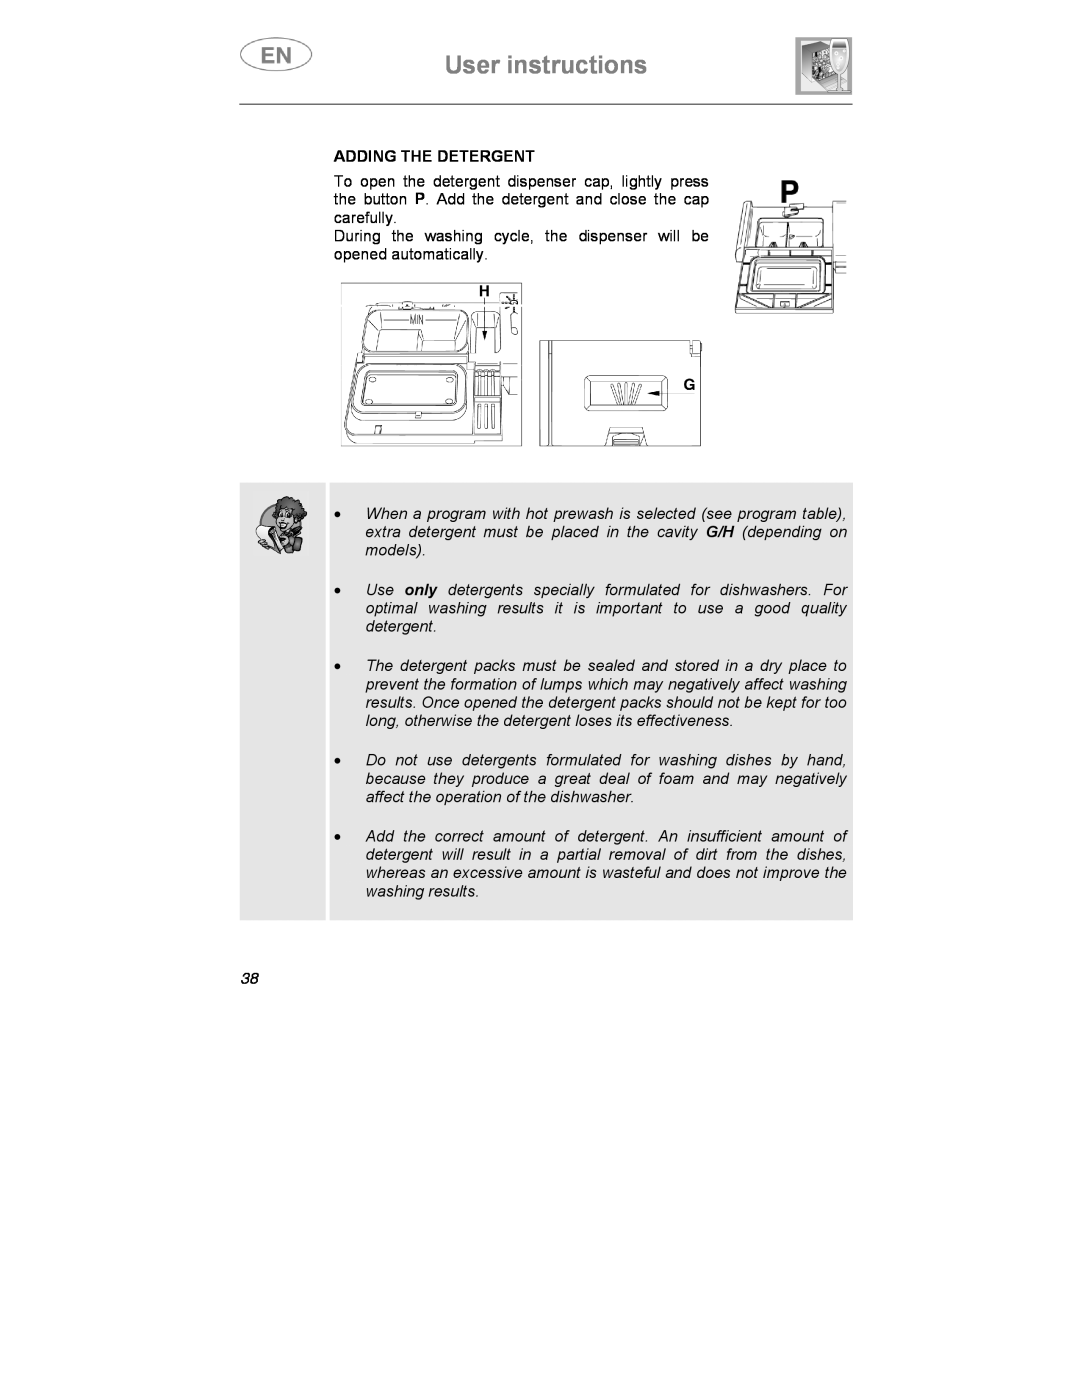 Smeg KLS01-2, KLS1257B instruction manual User instructions, Adding The Detergent 